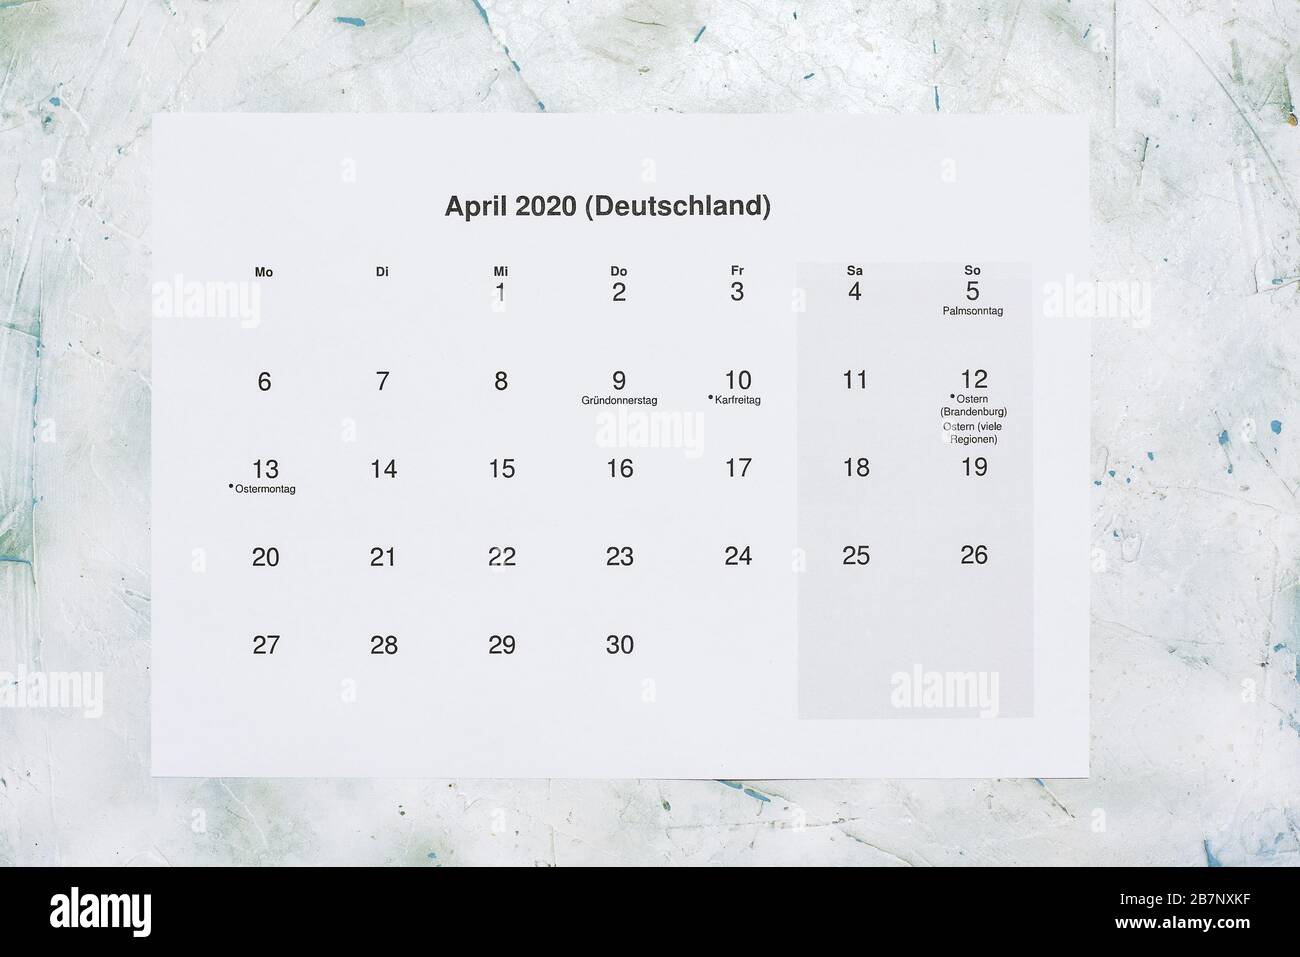 Monatskalender April 2020. Translation: Monthly April 2020 calendar. Paper April month calendar in Dutch. Top view Stock Photo